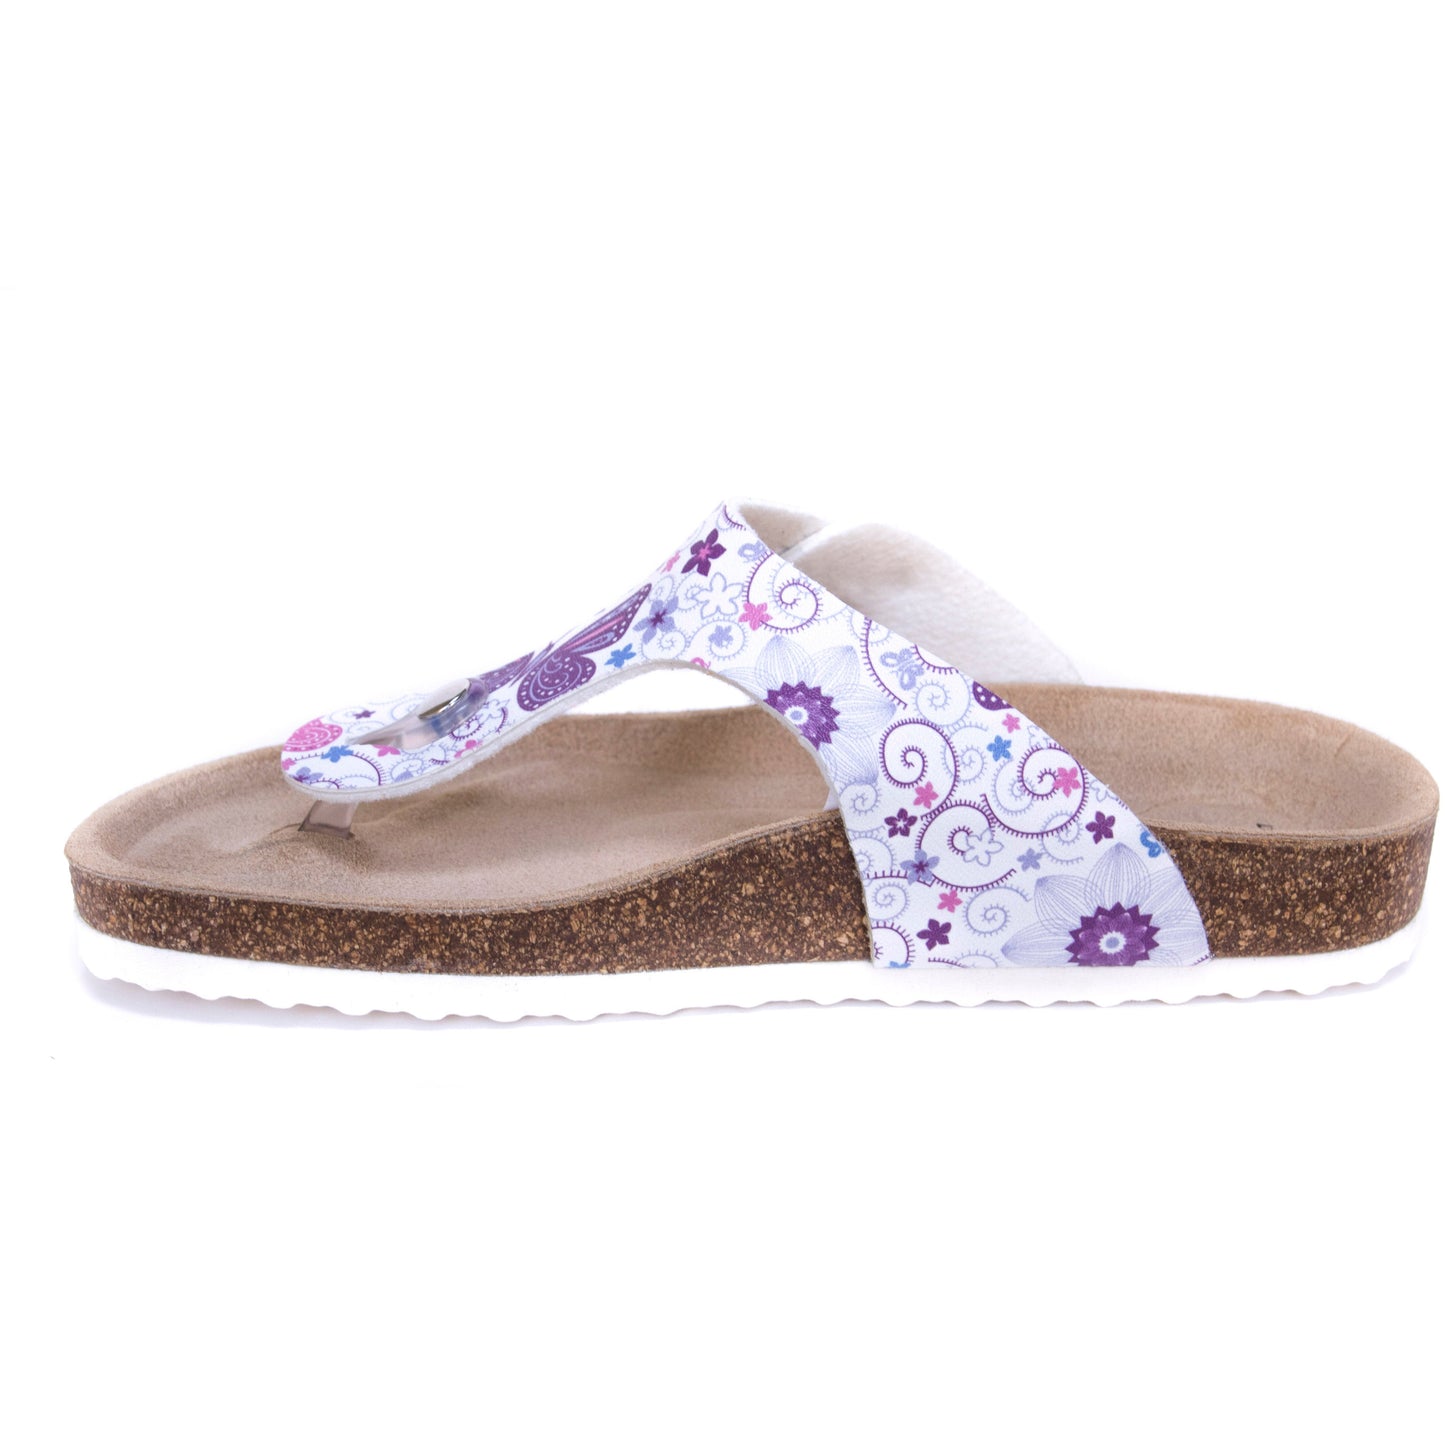 T96: colour 12 - white purple ladies orthotic sandals